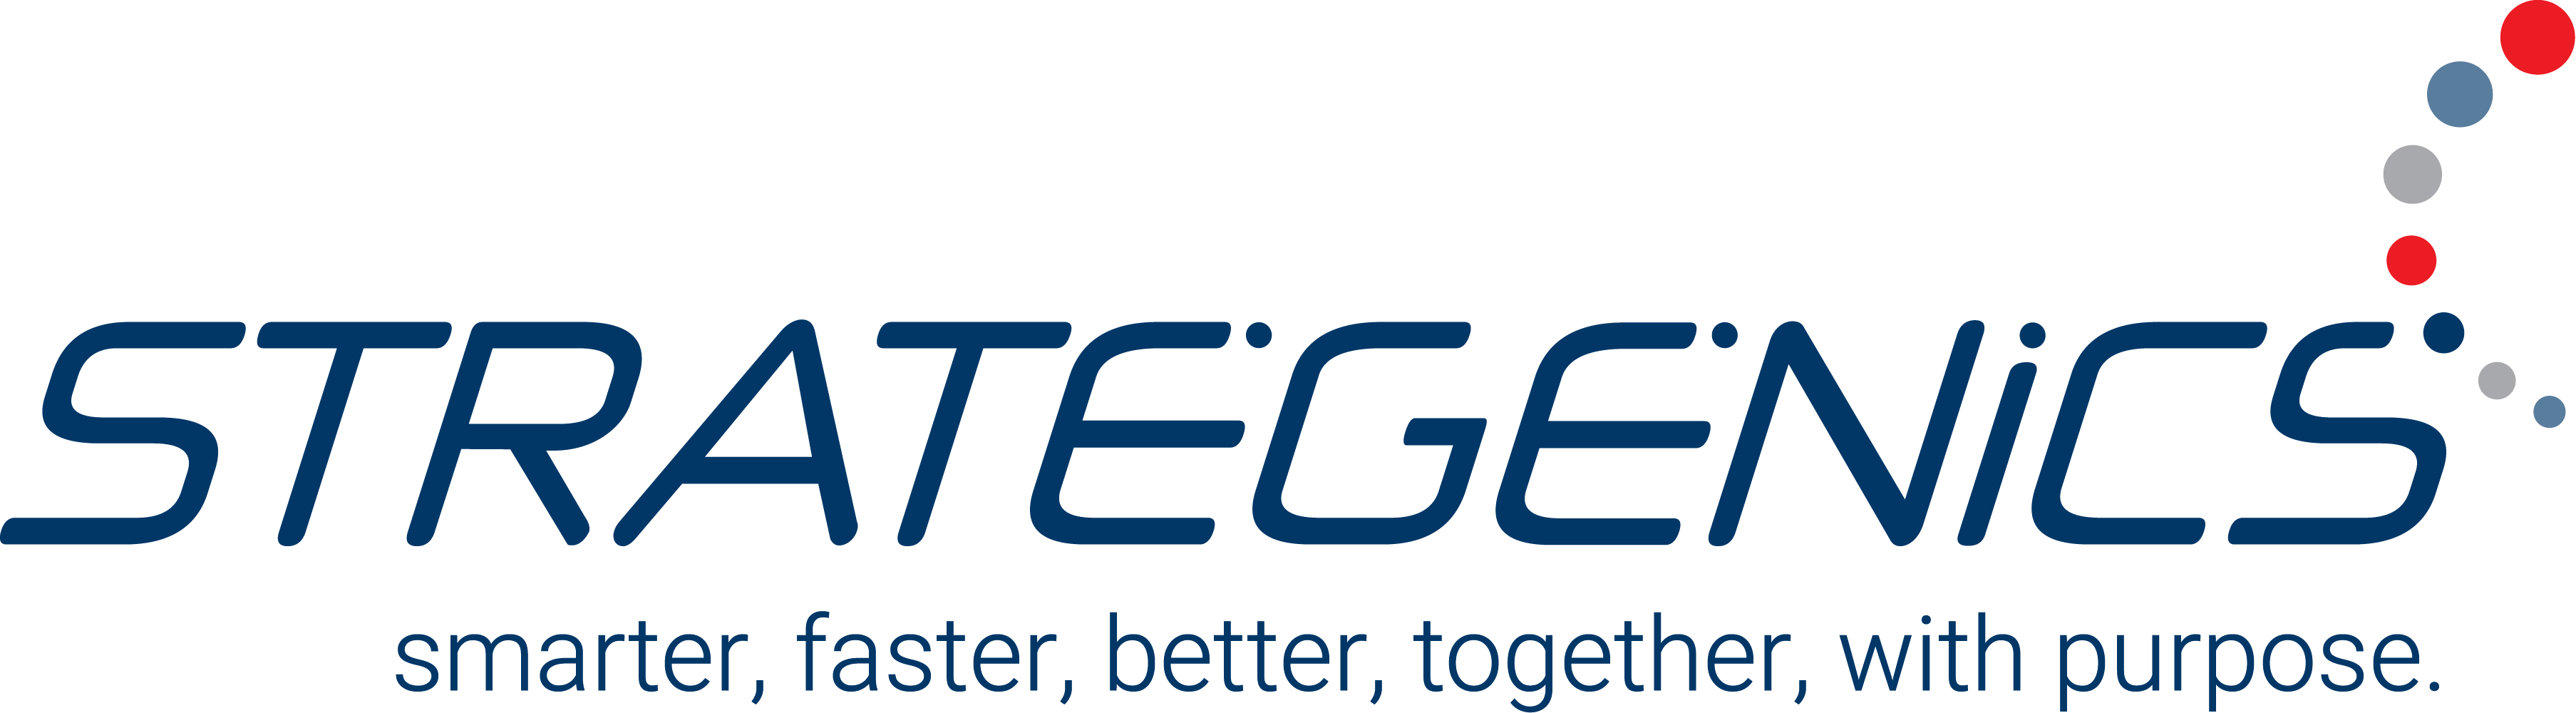 Strategenics logo